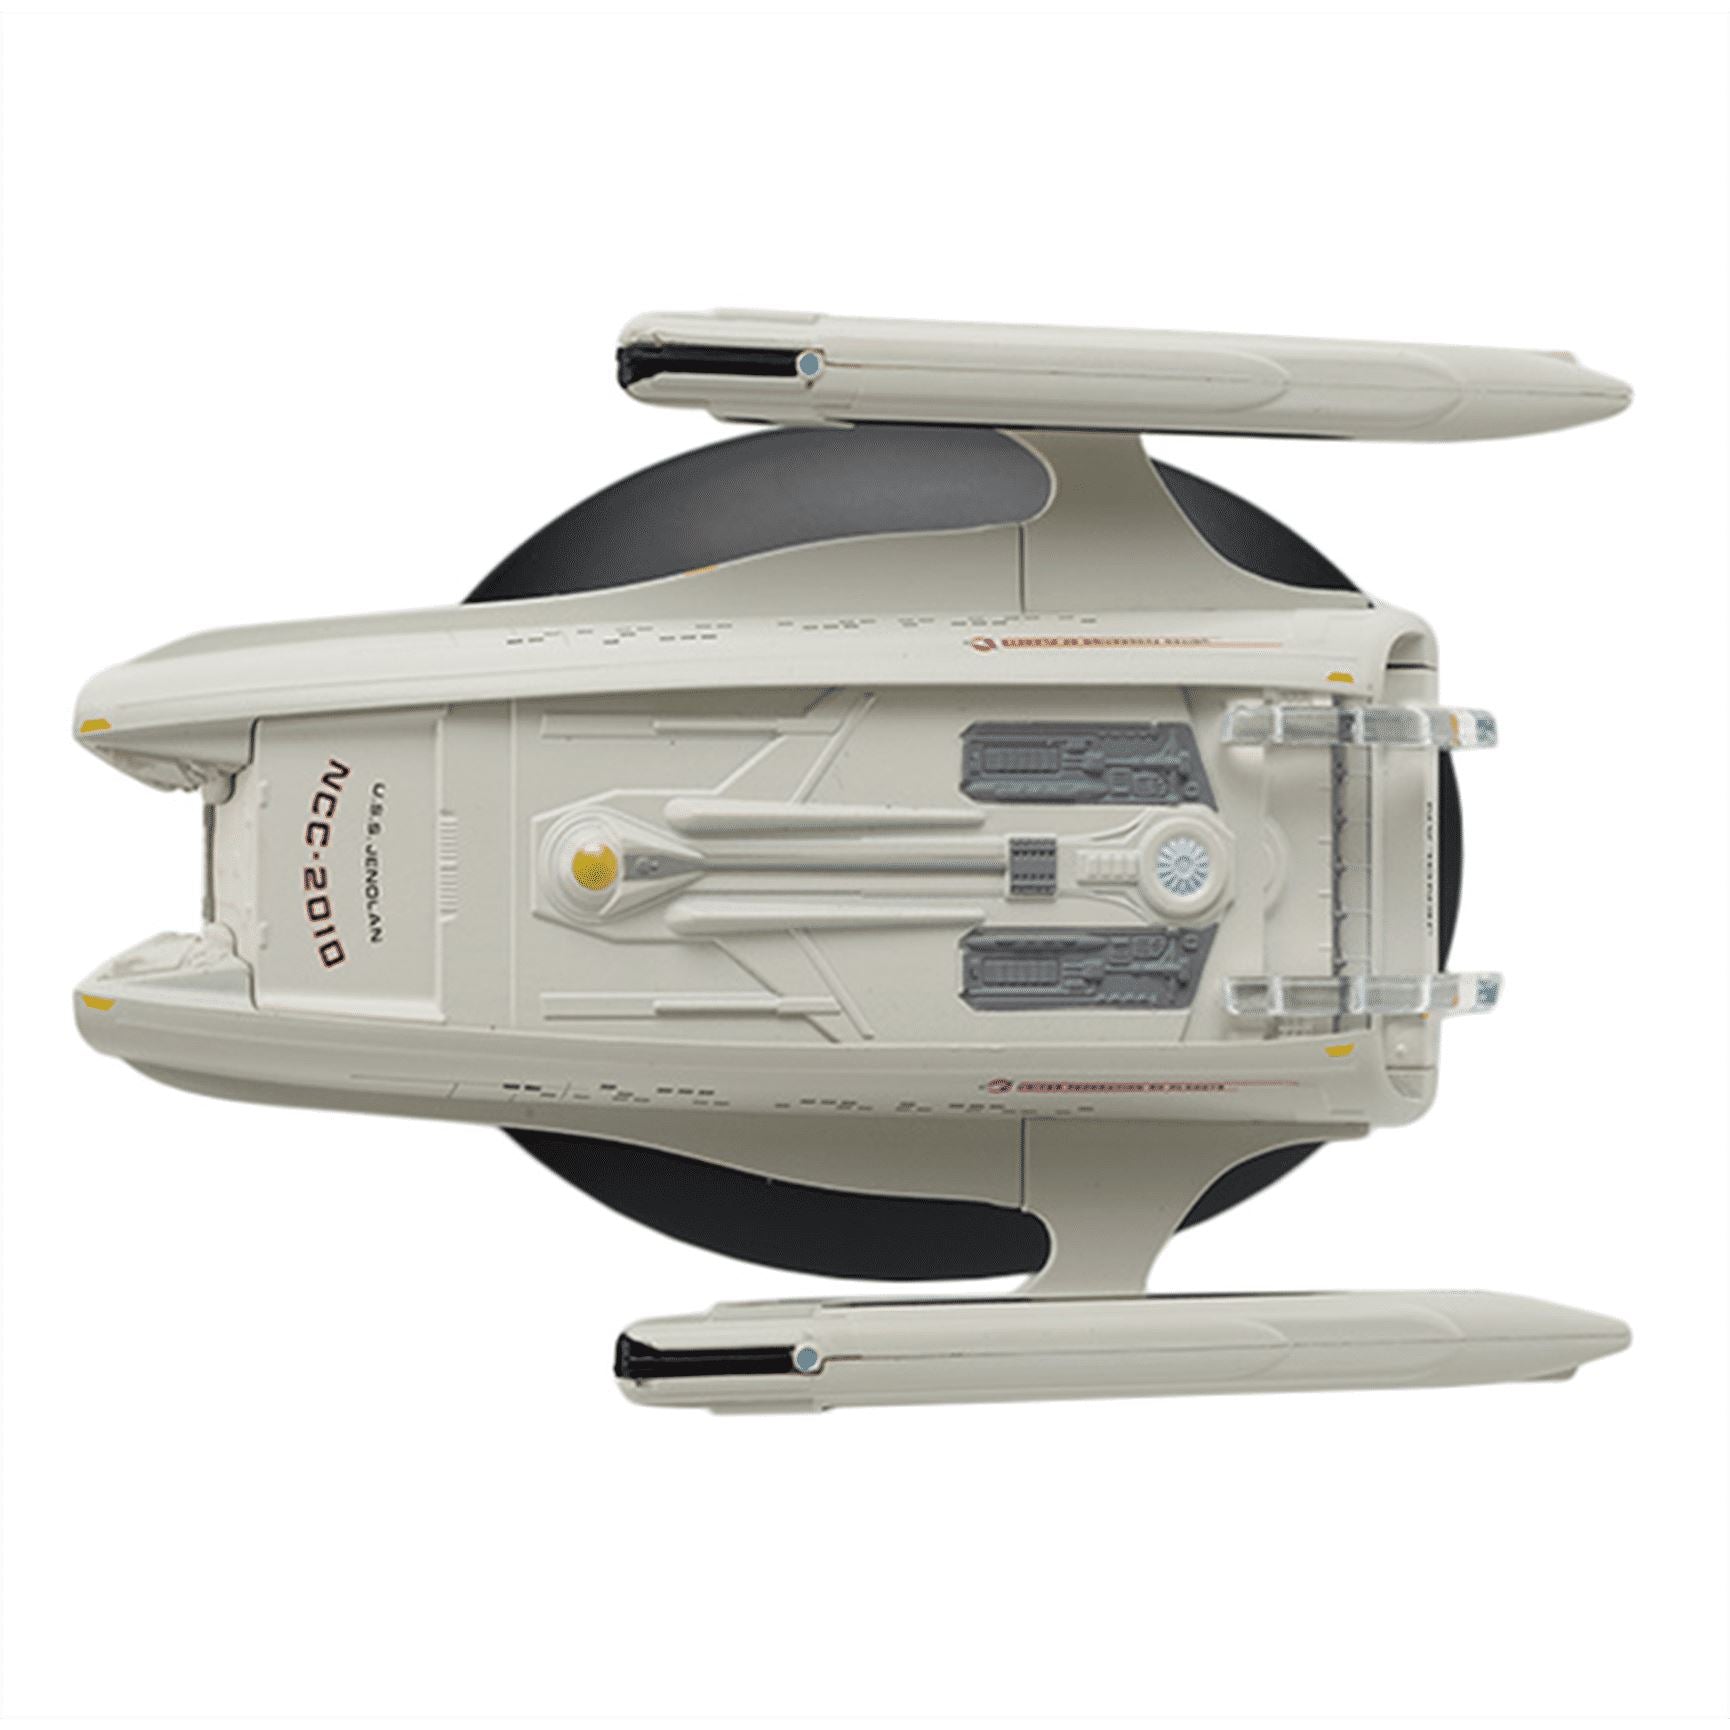 #104 U.S.S. Jenolan NCC-2010 Starship Model Die Cast Ship (Eaglemoss Star Trek)